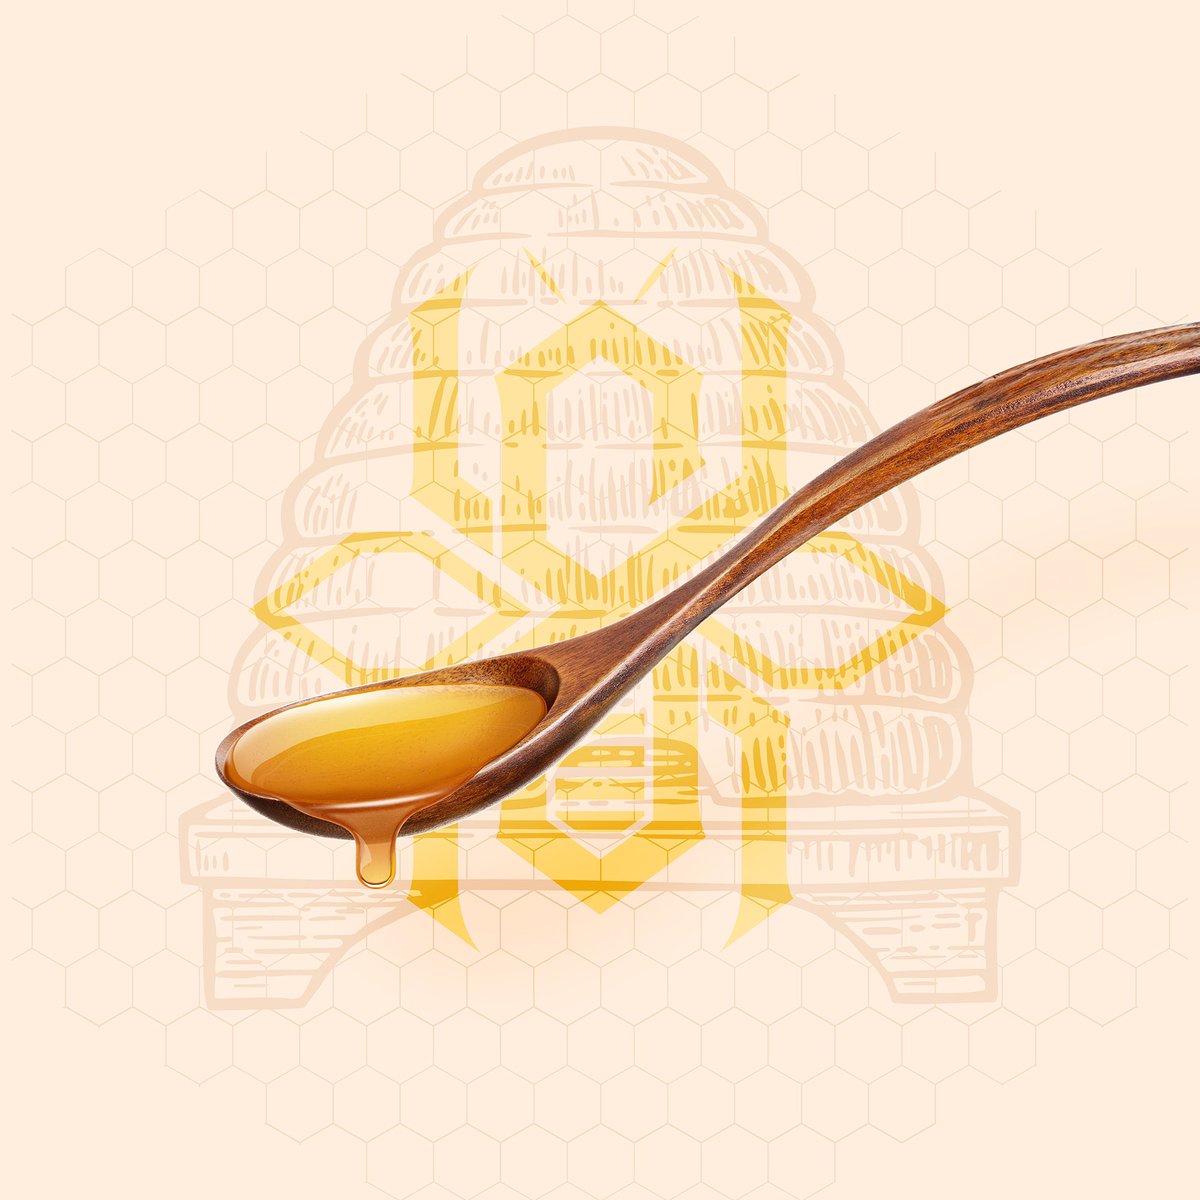 XS Monogram design.
.
.
.
.
.
.
.
.
.
.
.

#Handlettering #Lettering #Type #Logotype #Monogram #logo #Branding #Art #Honey #Honeyproducts #organic #pure #bee #hive #xs #brand